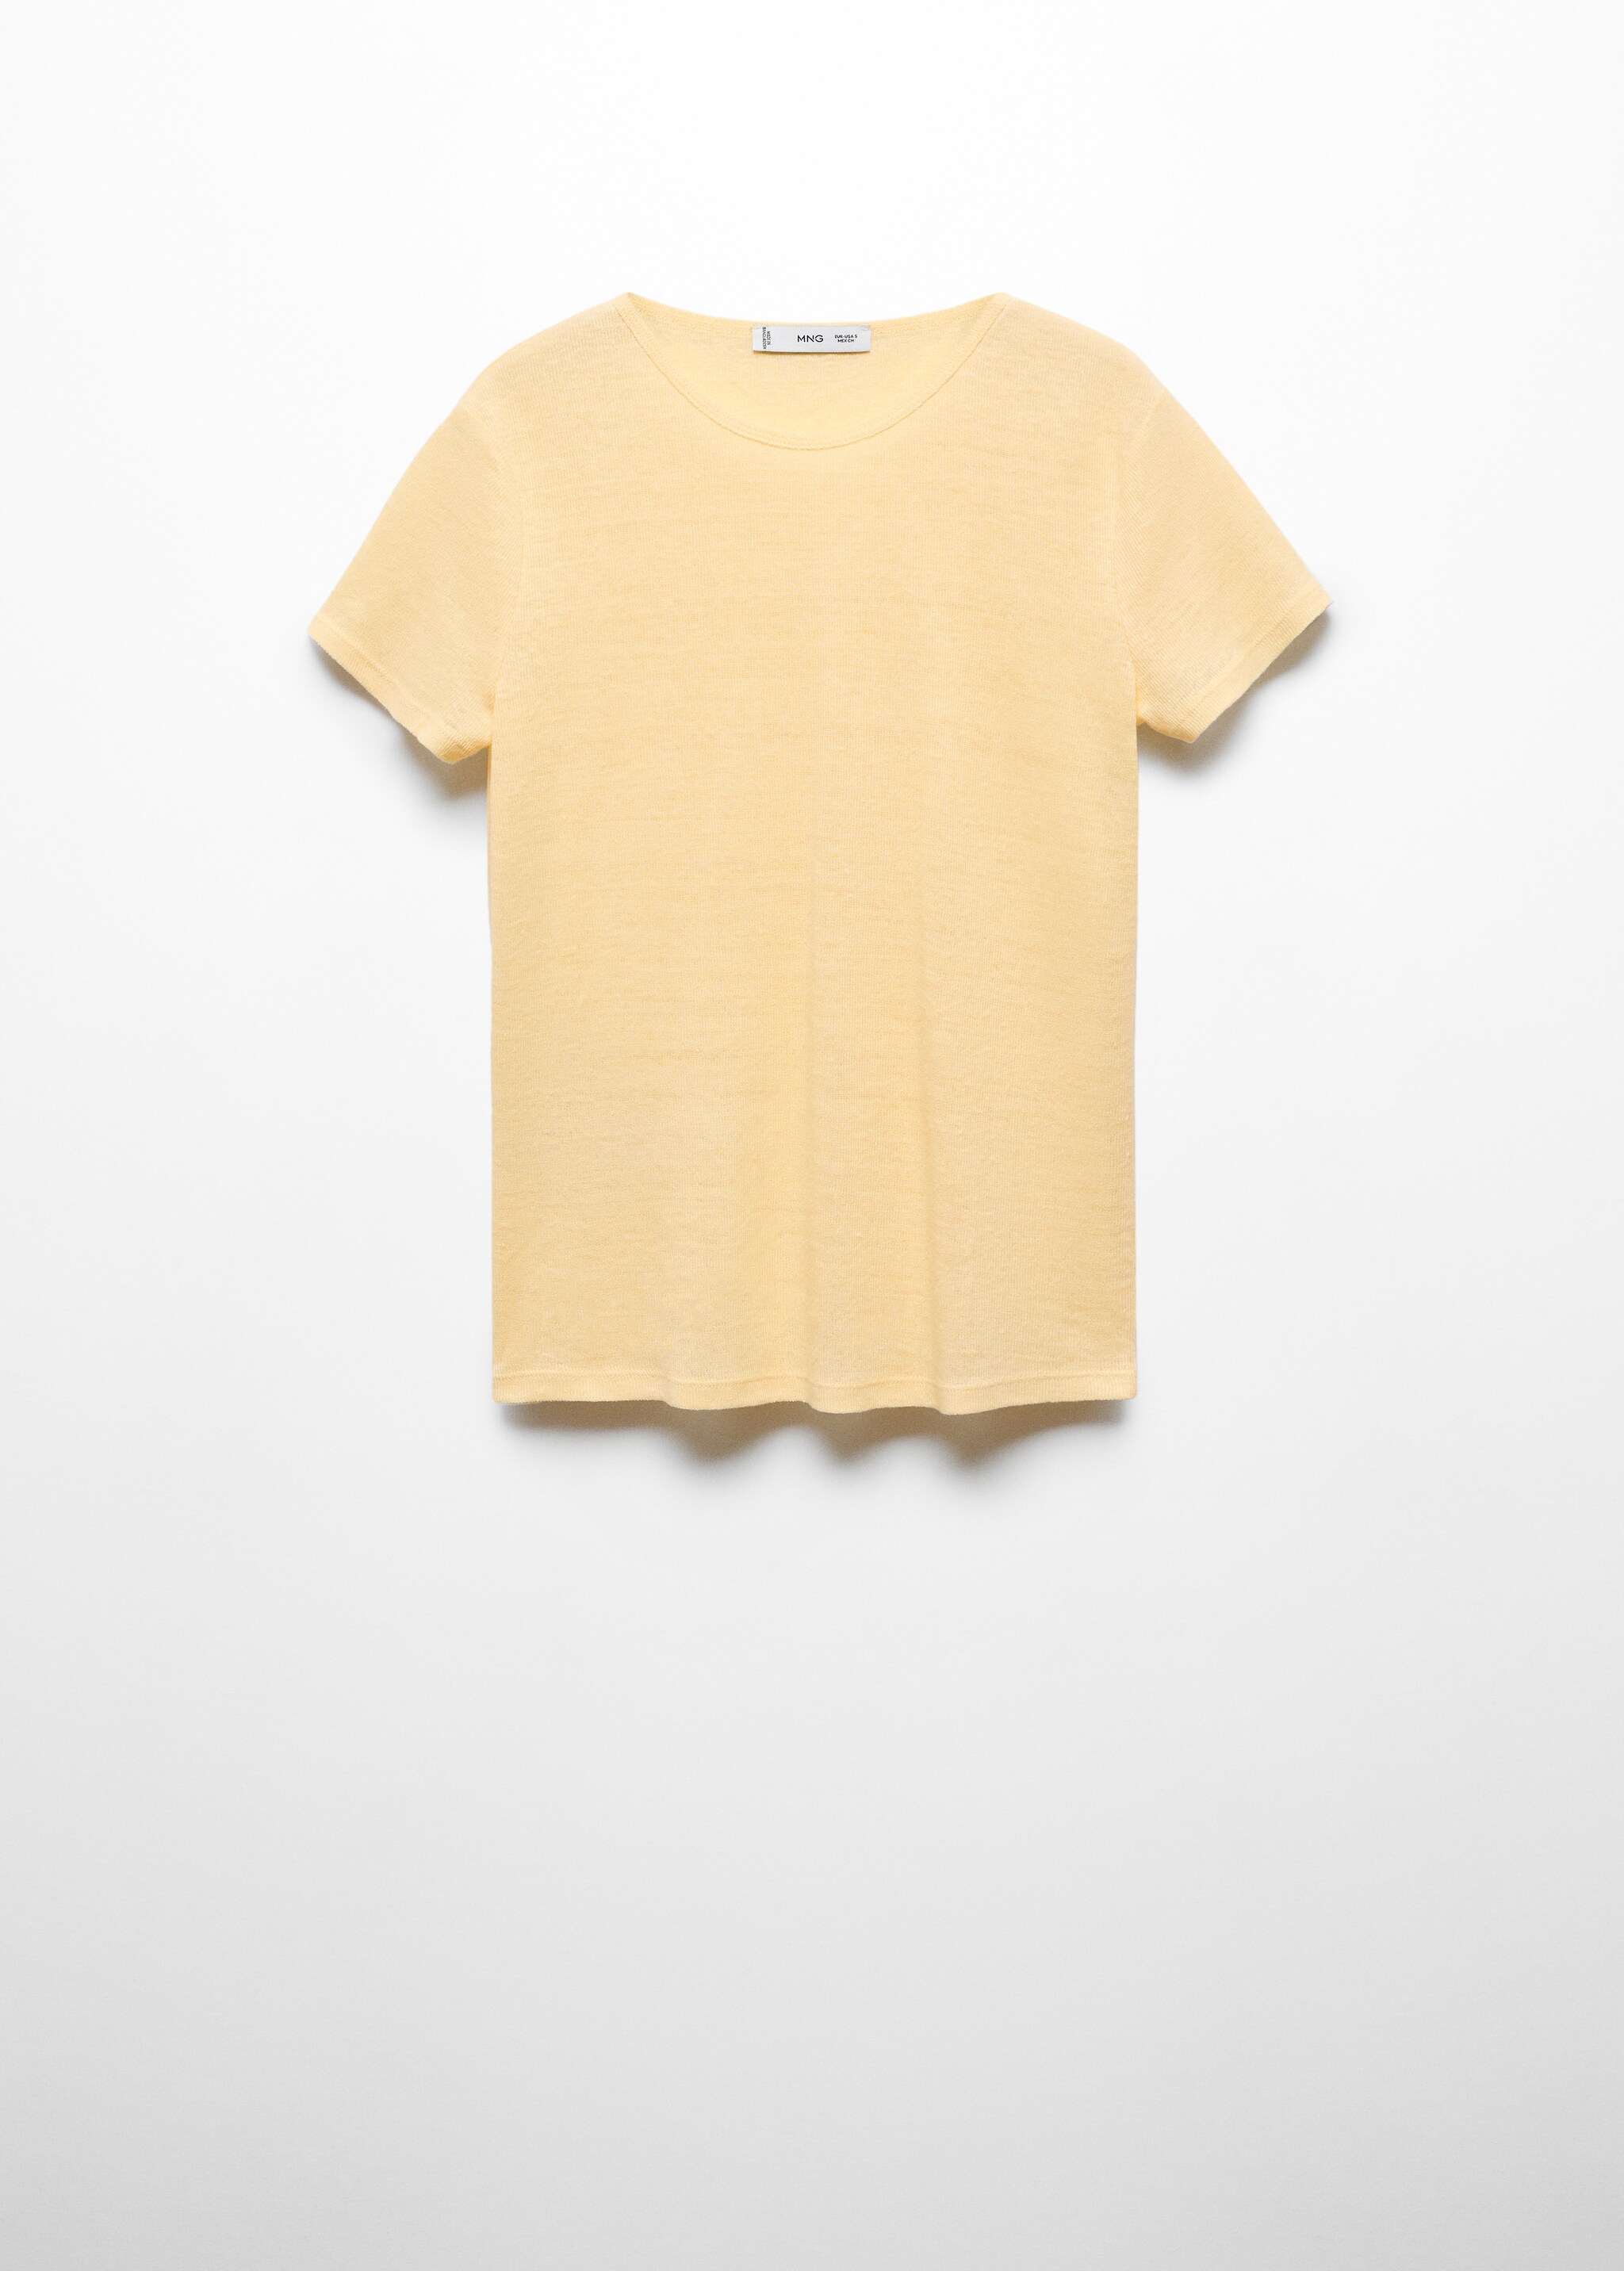 Camiseta lino manga corta - Artículo sin modelo